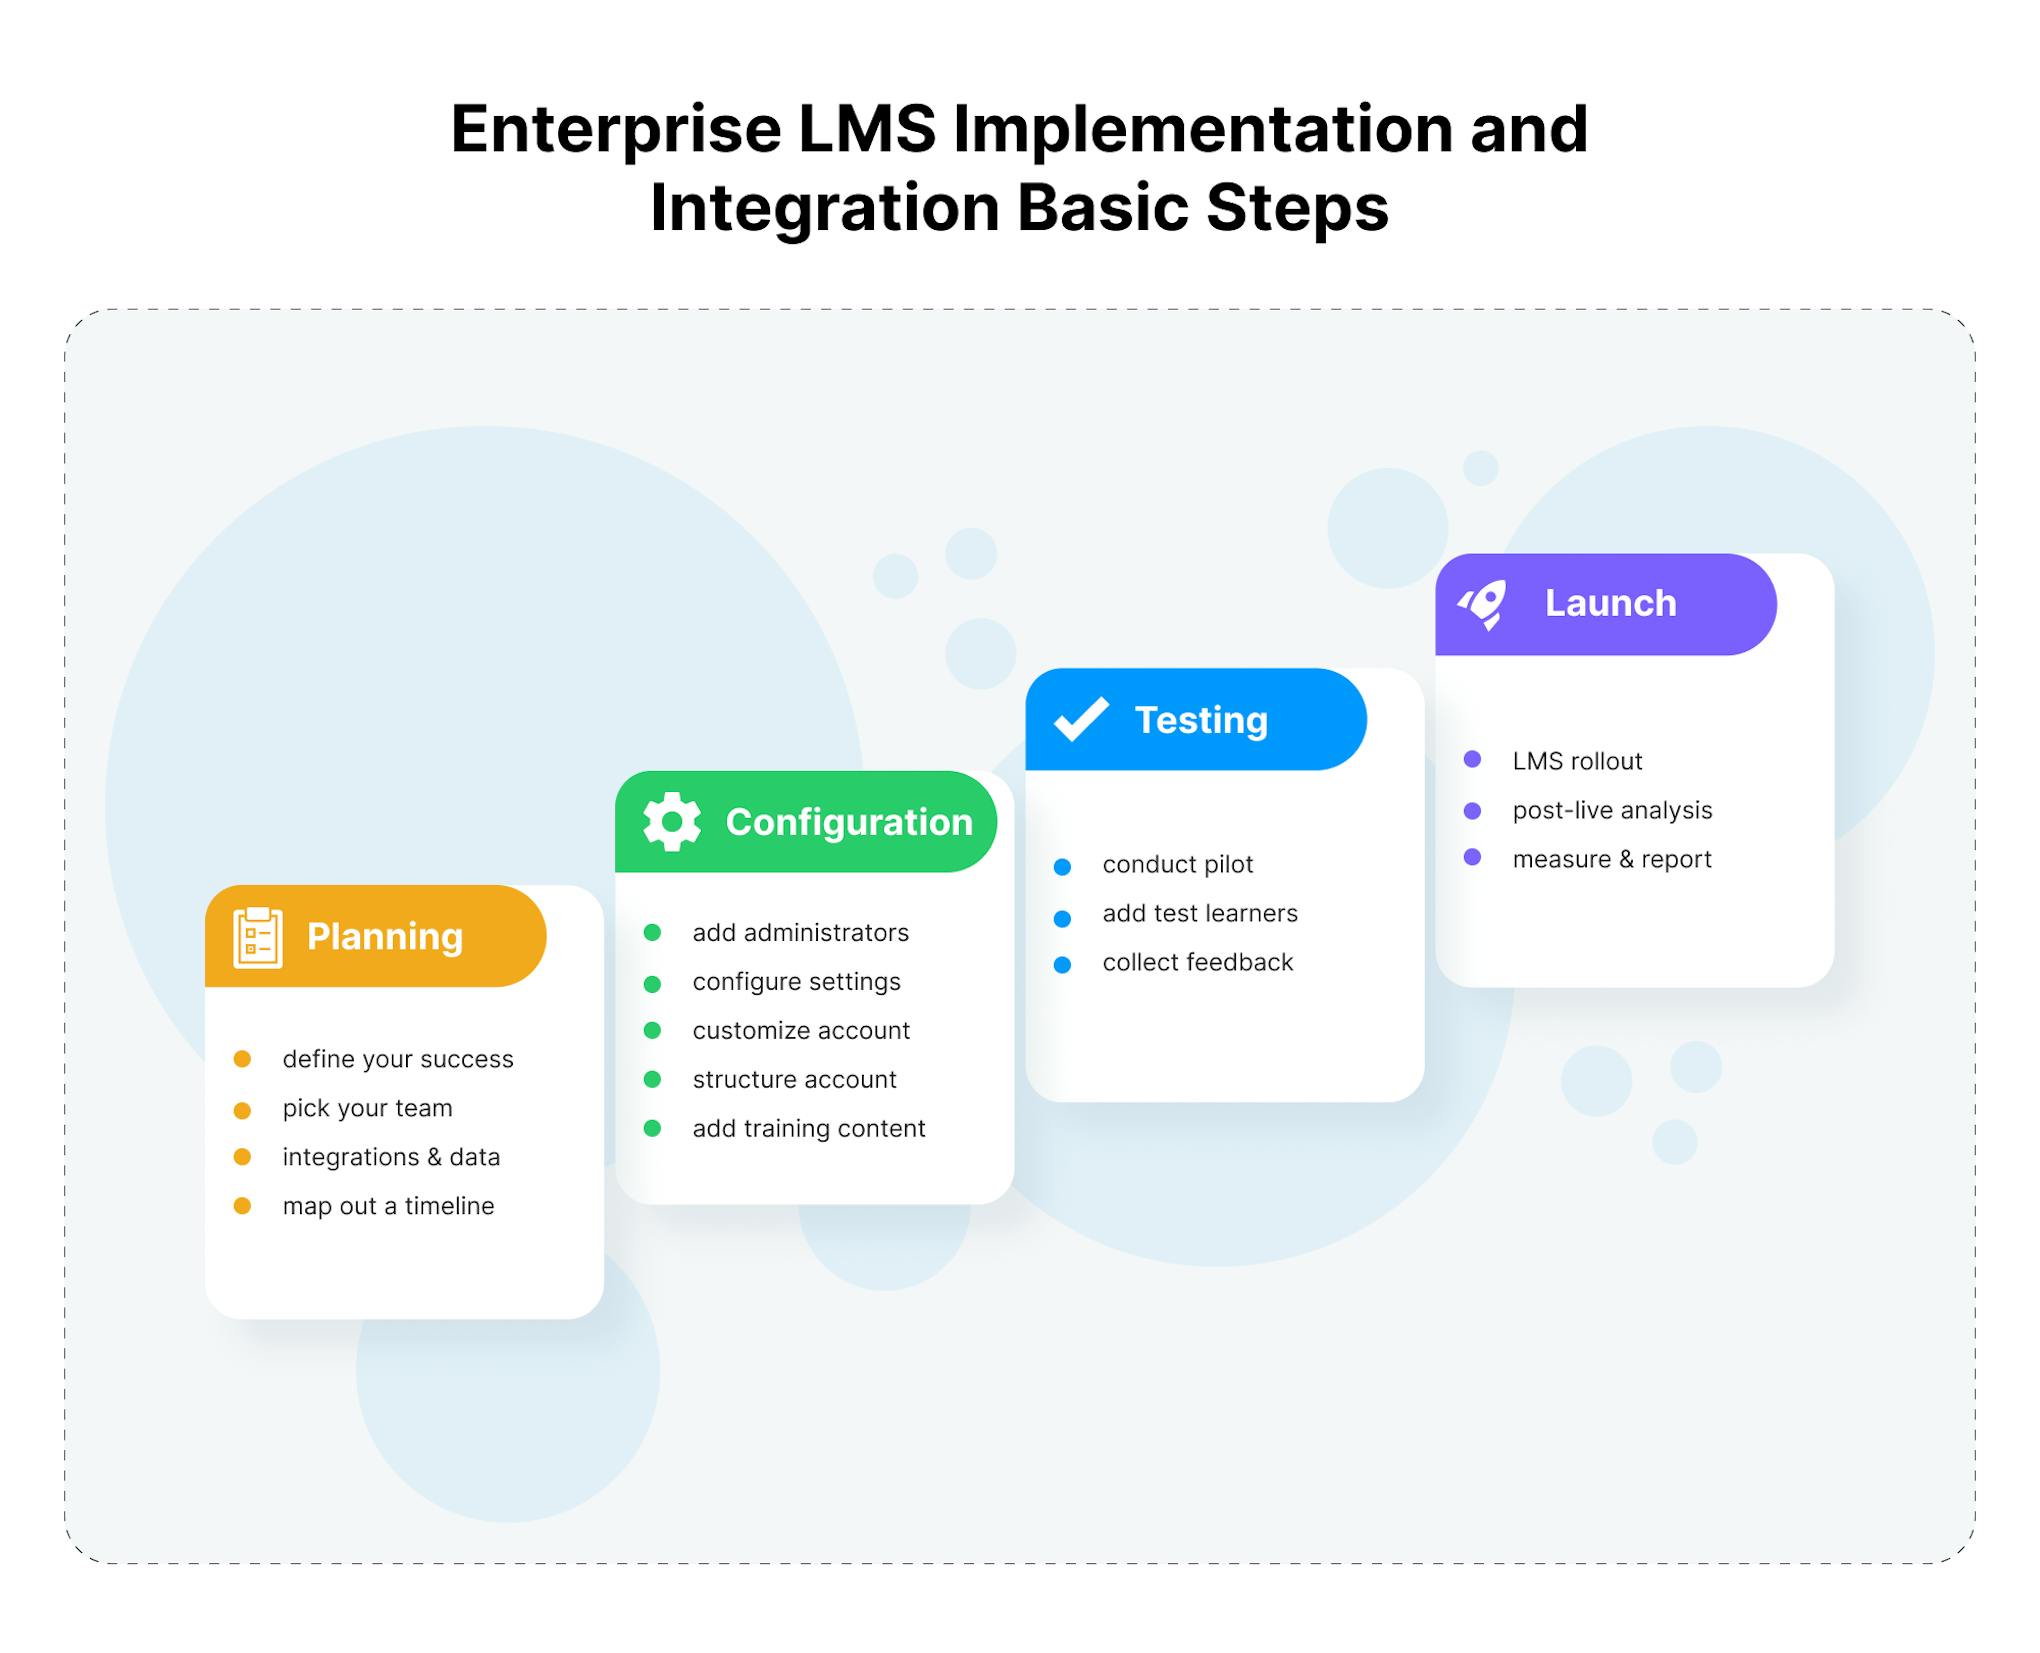 Implementation and integration of an enterprise LMS